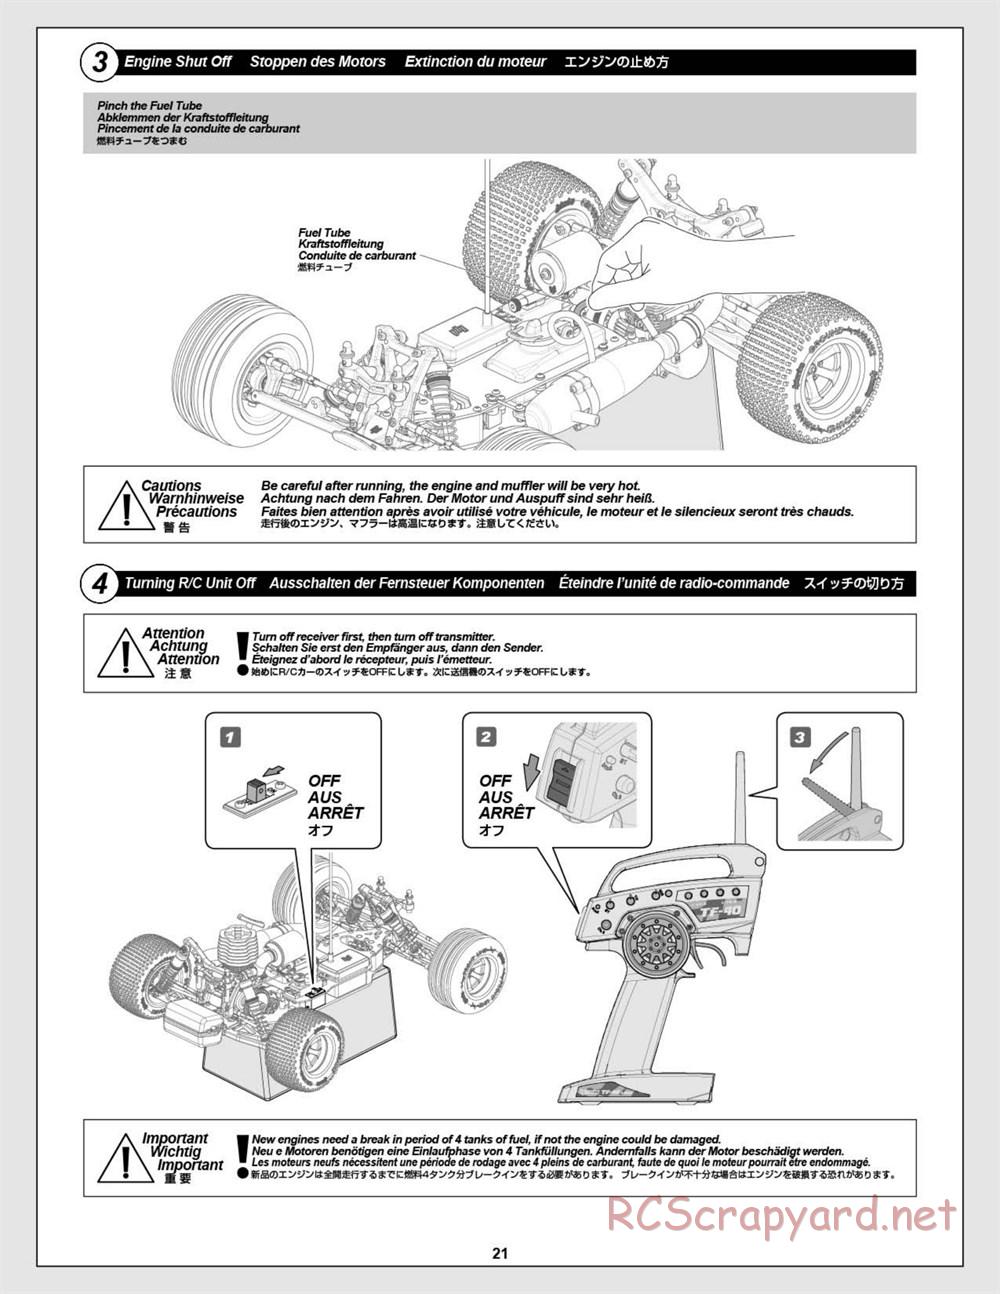 HPI - Firestorm 10T - Manual - Page 21